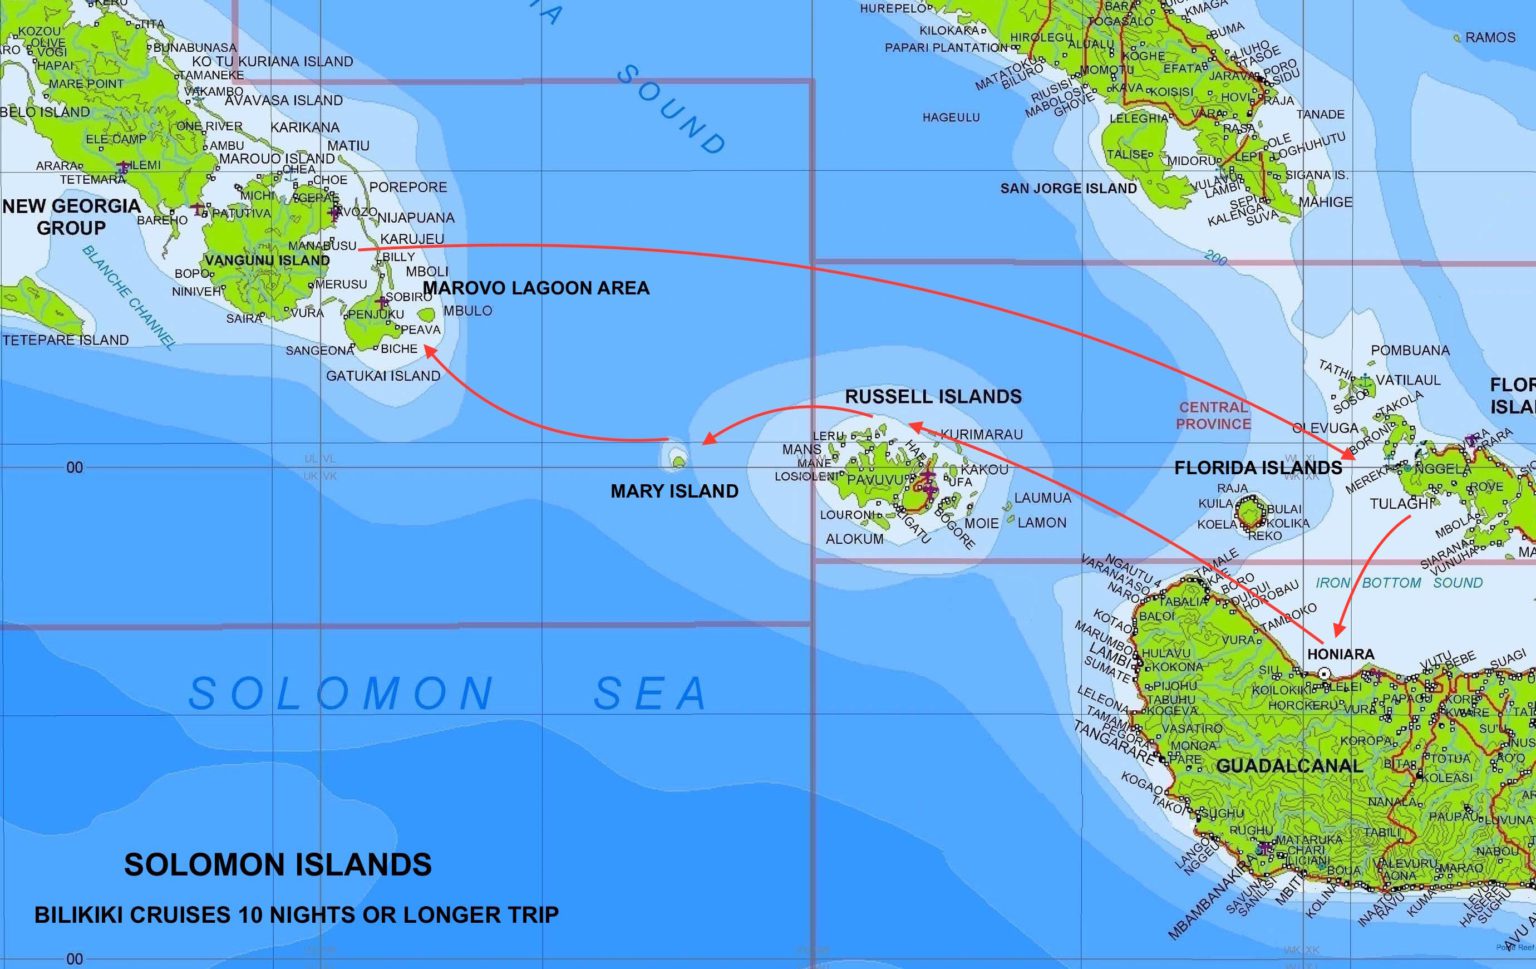 Solomon islands – Honiara – Bilikiki Cruises